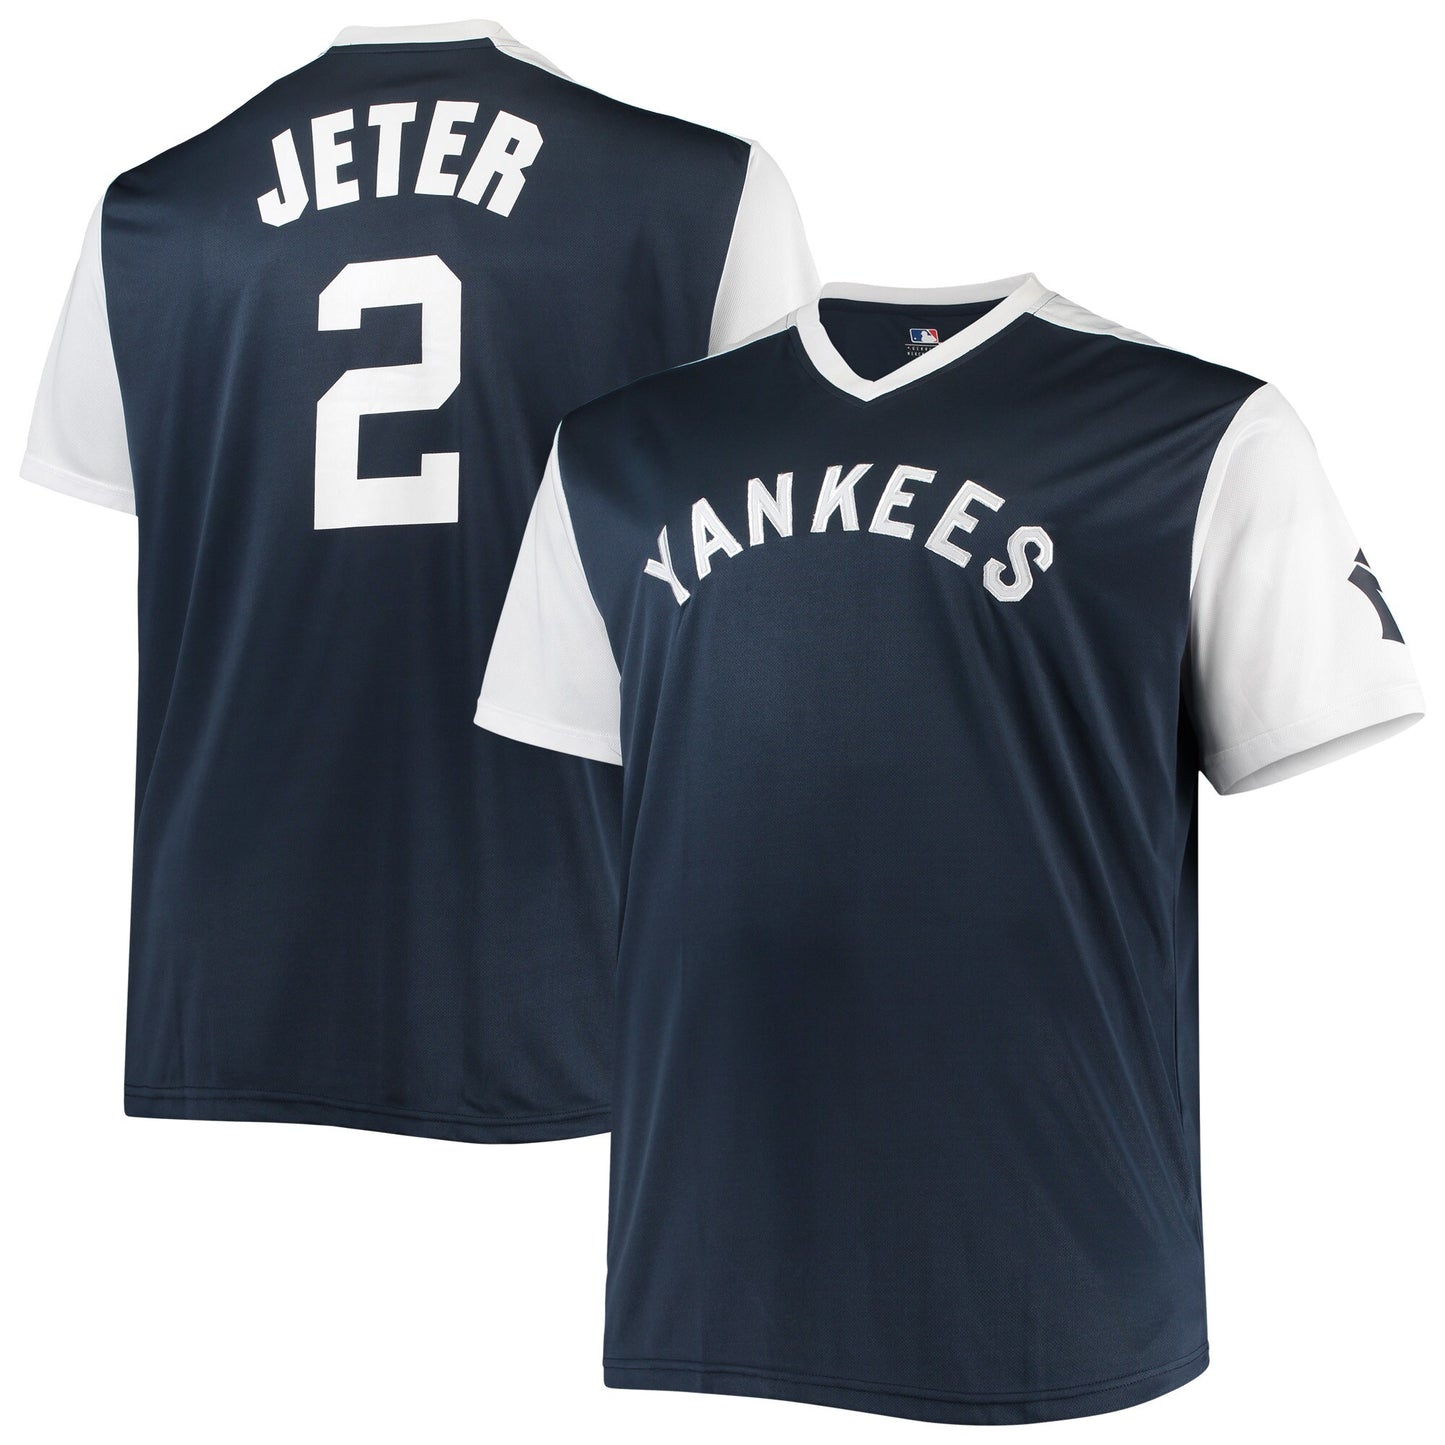 Derek Jeter New York Yankees Cooperstown Collection Replica Player Jersey - Navy/White